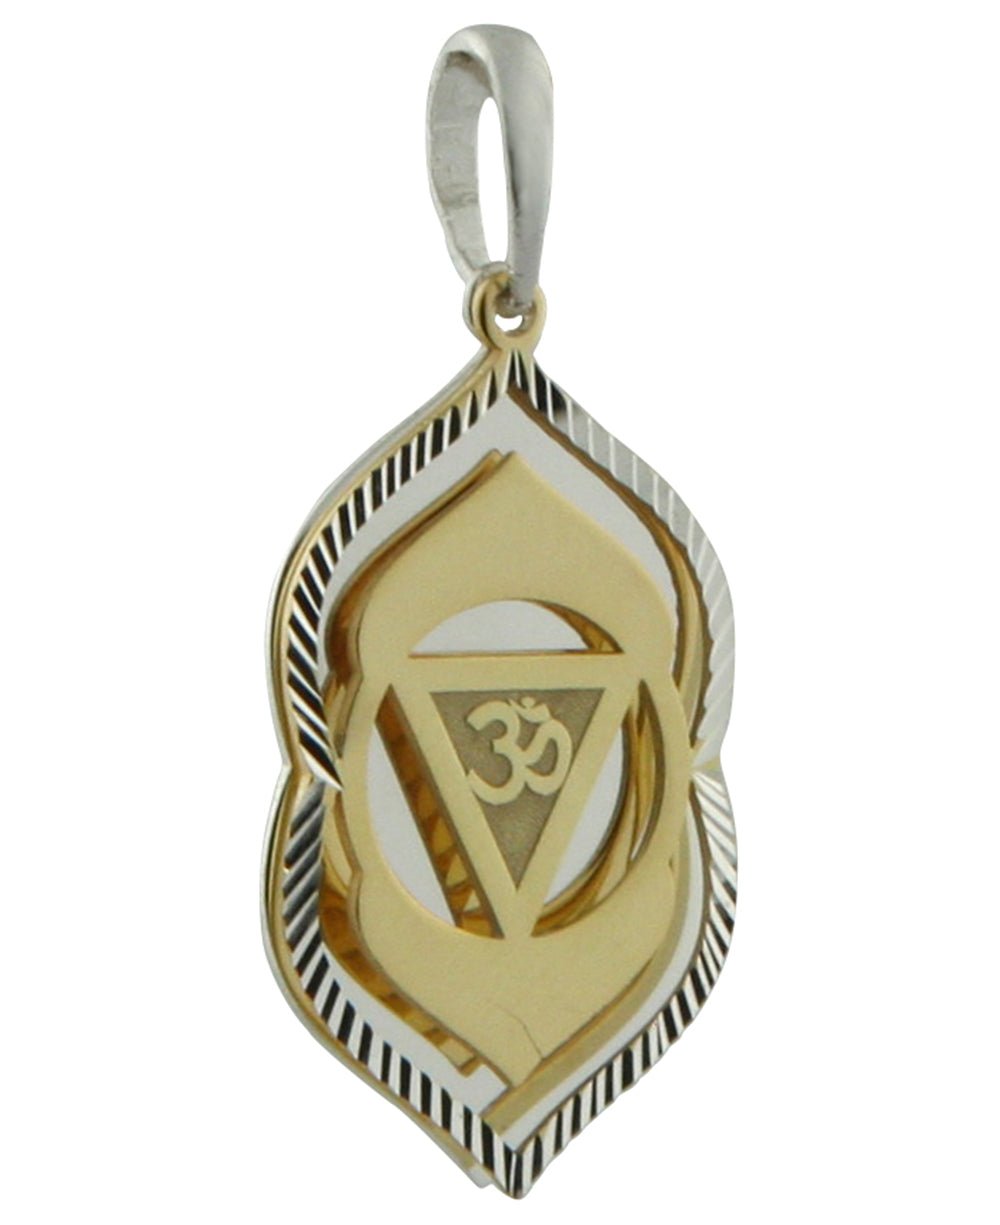 Chakra Jewelry Pendants in Silver and Gold Layered Style - Pendant Third Eye Chakra